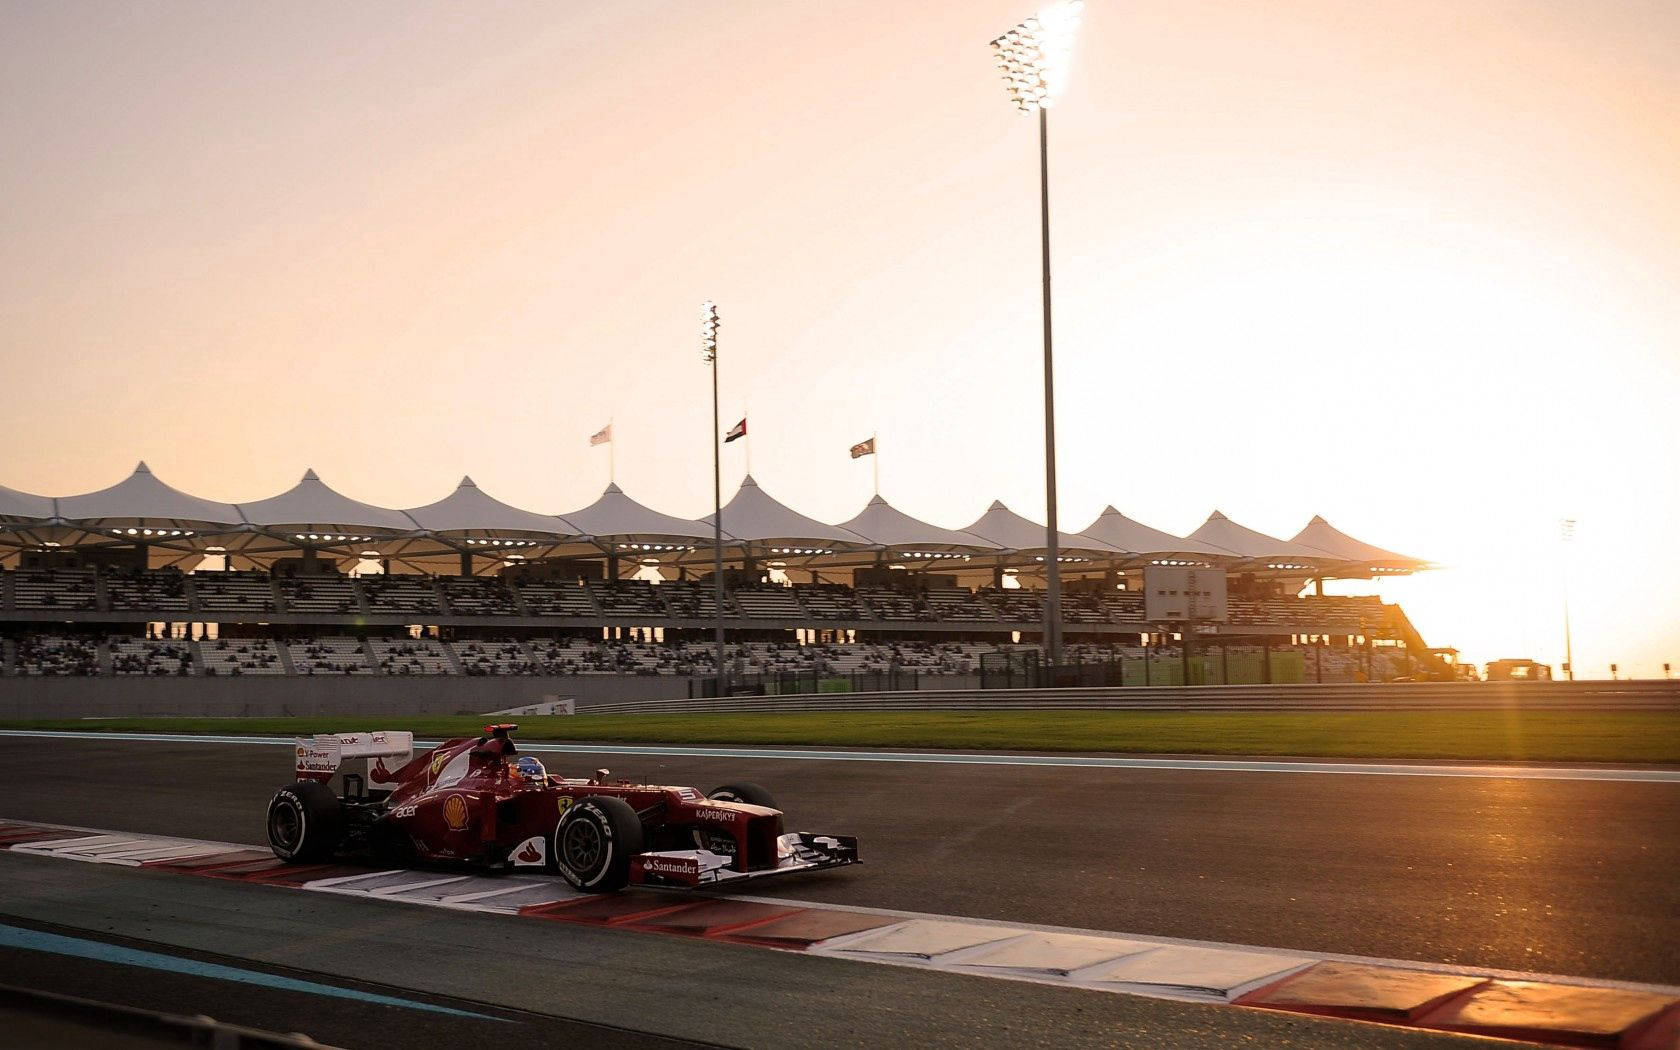 A Dynamic View Of A Ferrari Formula One Car On The Track